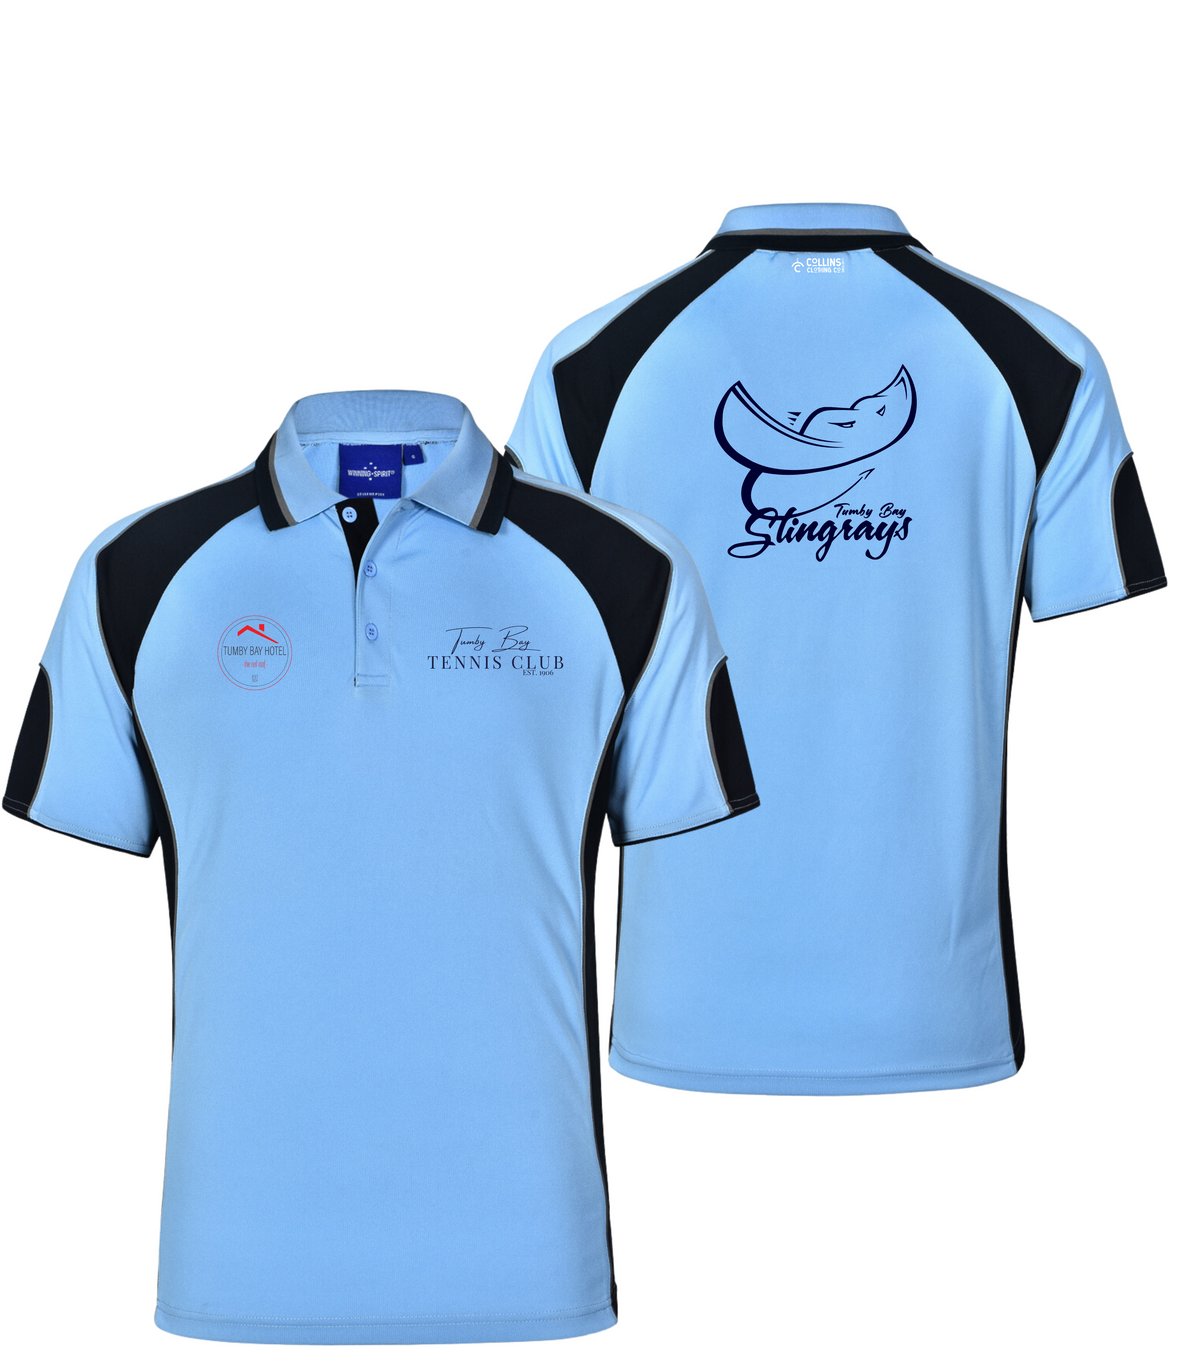 Tumby Bay Tennis Club Men/Women Stingrays Alliance polo KS61-Collins Clothing Co